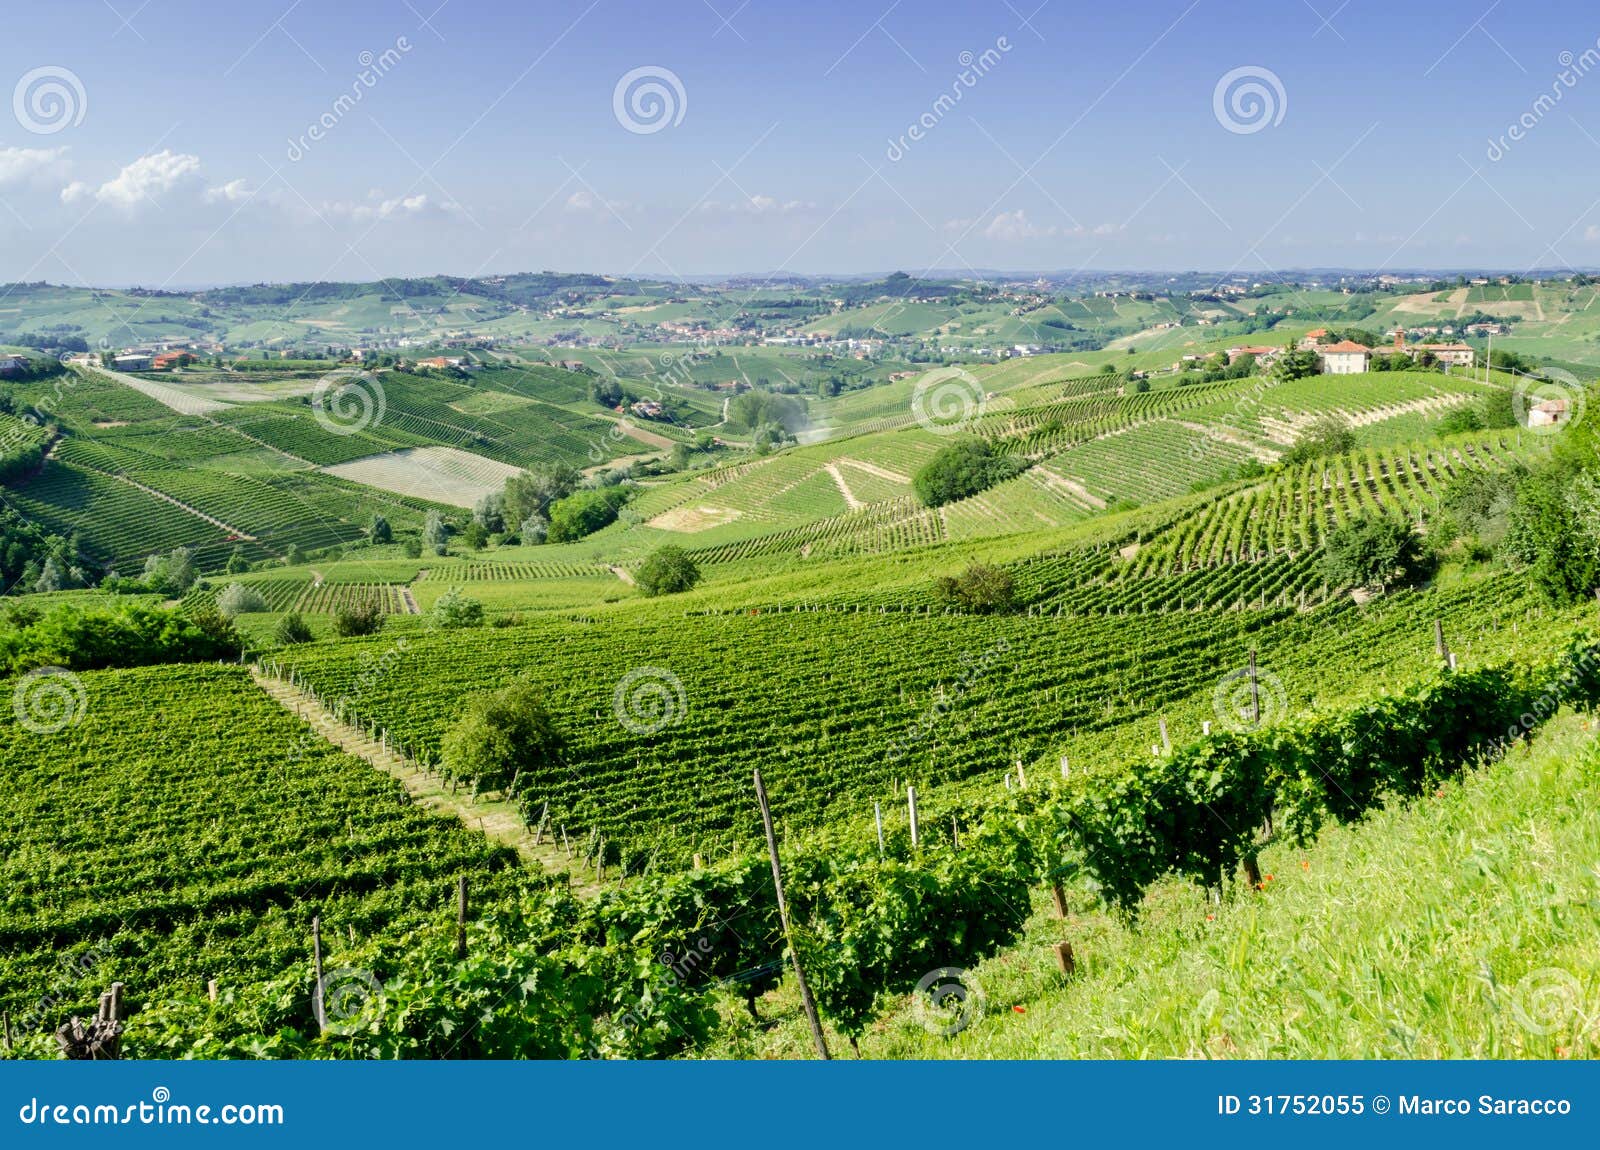 langhe, hilly wine region in piedmont, italy